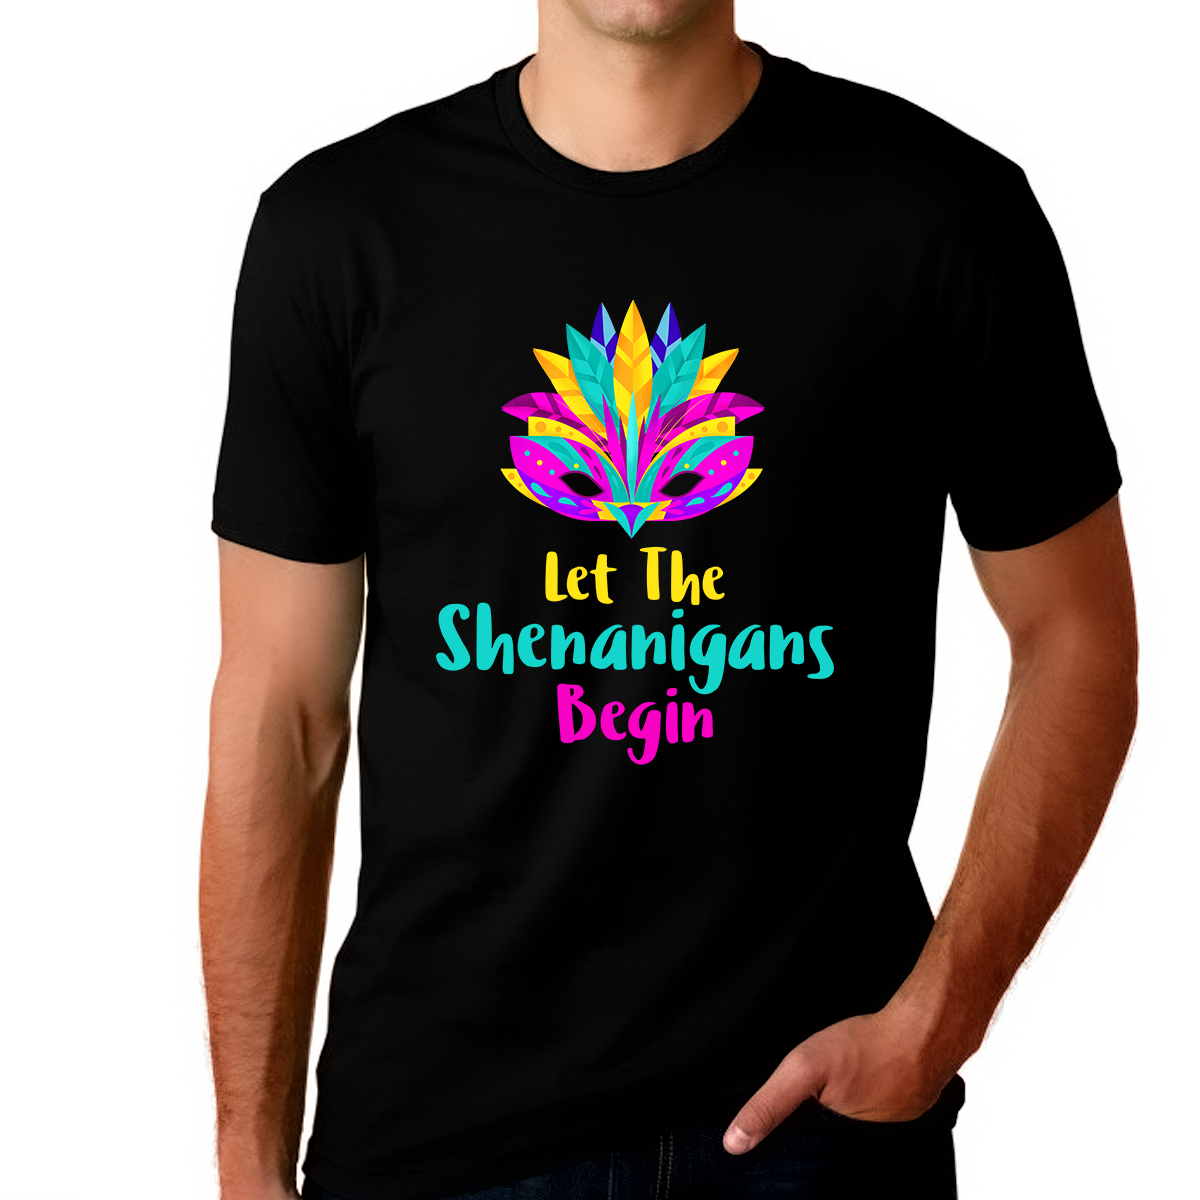 Shenanigans Shirt Fun Mardi Gras Shirt for Men Mardi Gras Shirt New Orleans Mardi Gras Outfit for Men